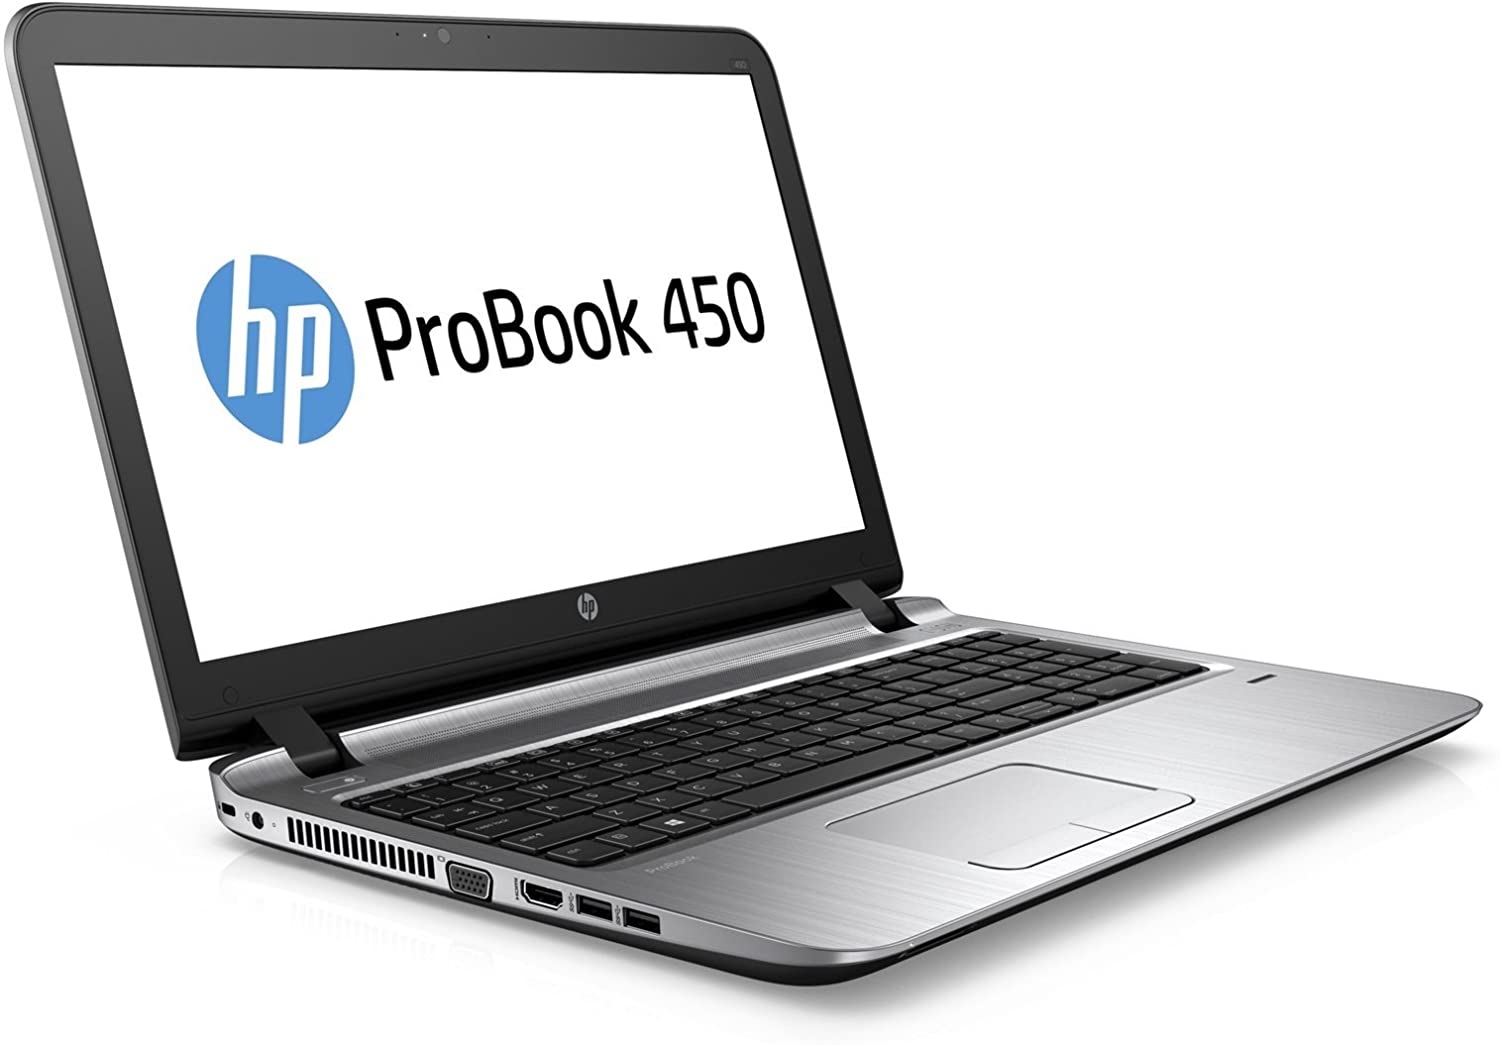 Hp Probook 450 G1 Laptop Intel Core I5 250 Ghz 4gb Ram 500gb Hdd W10p 28099 Picclick 2452